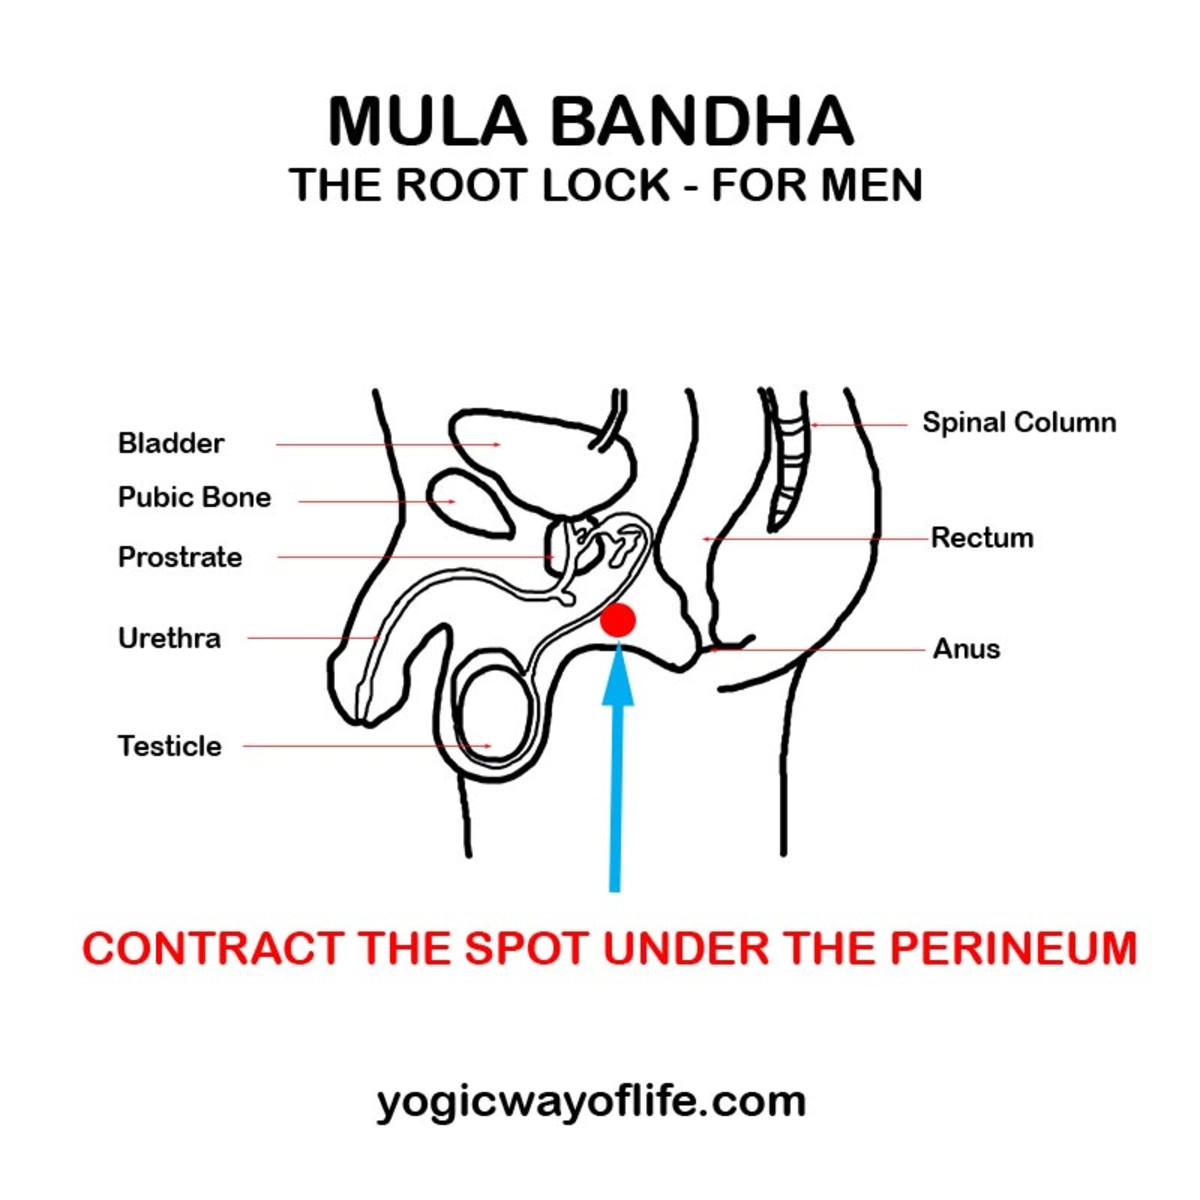 Mula Bandha contraction in Men